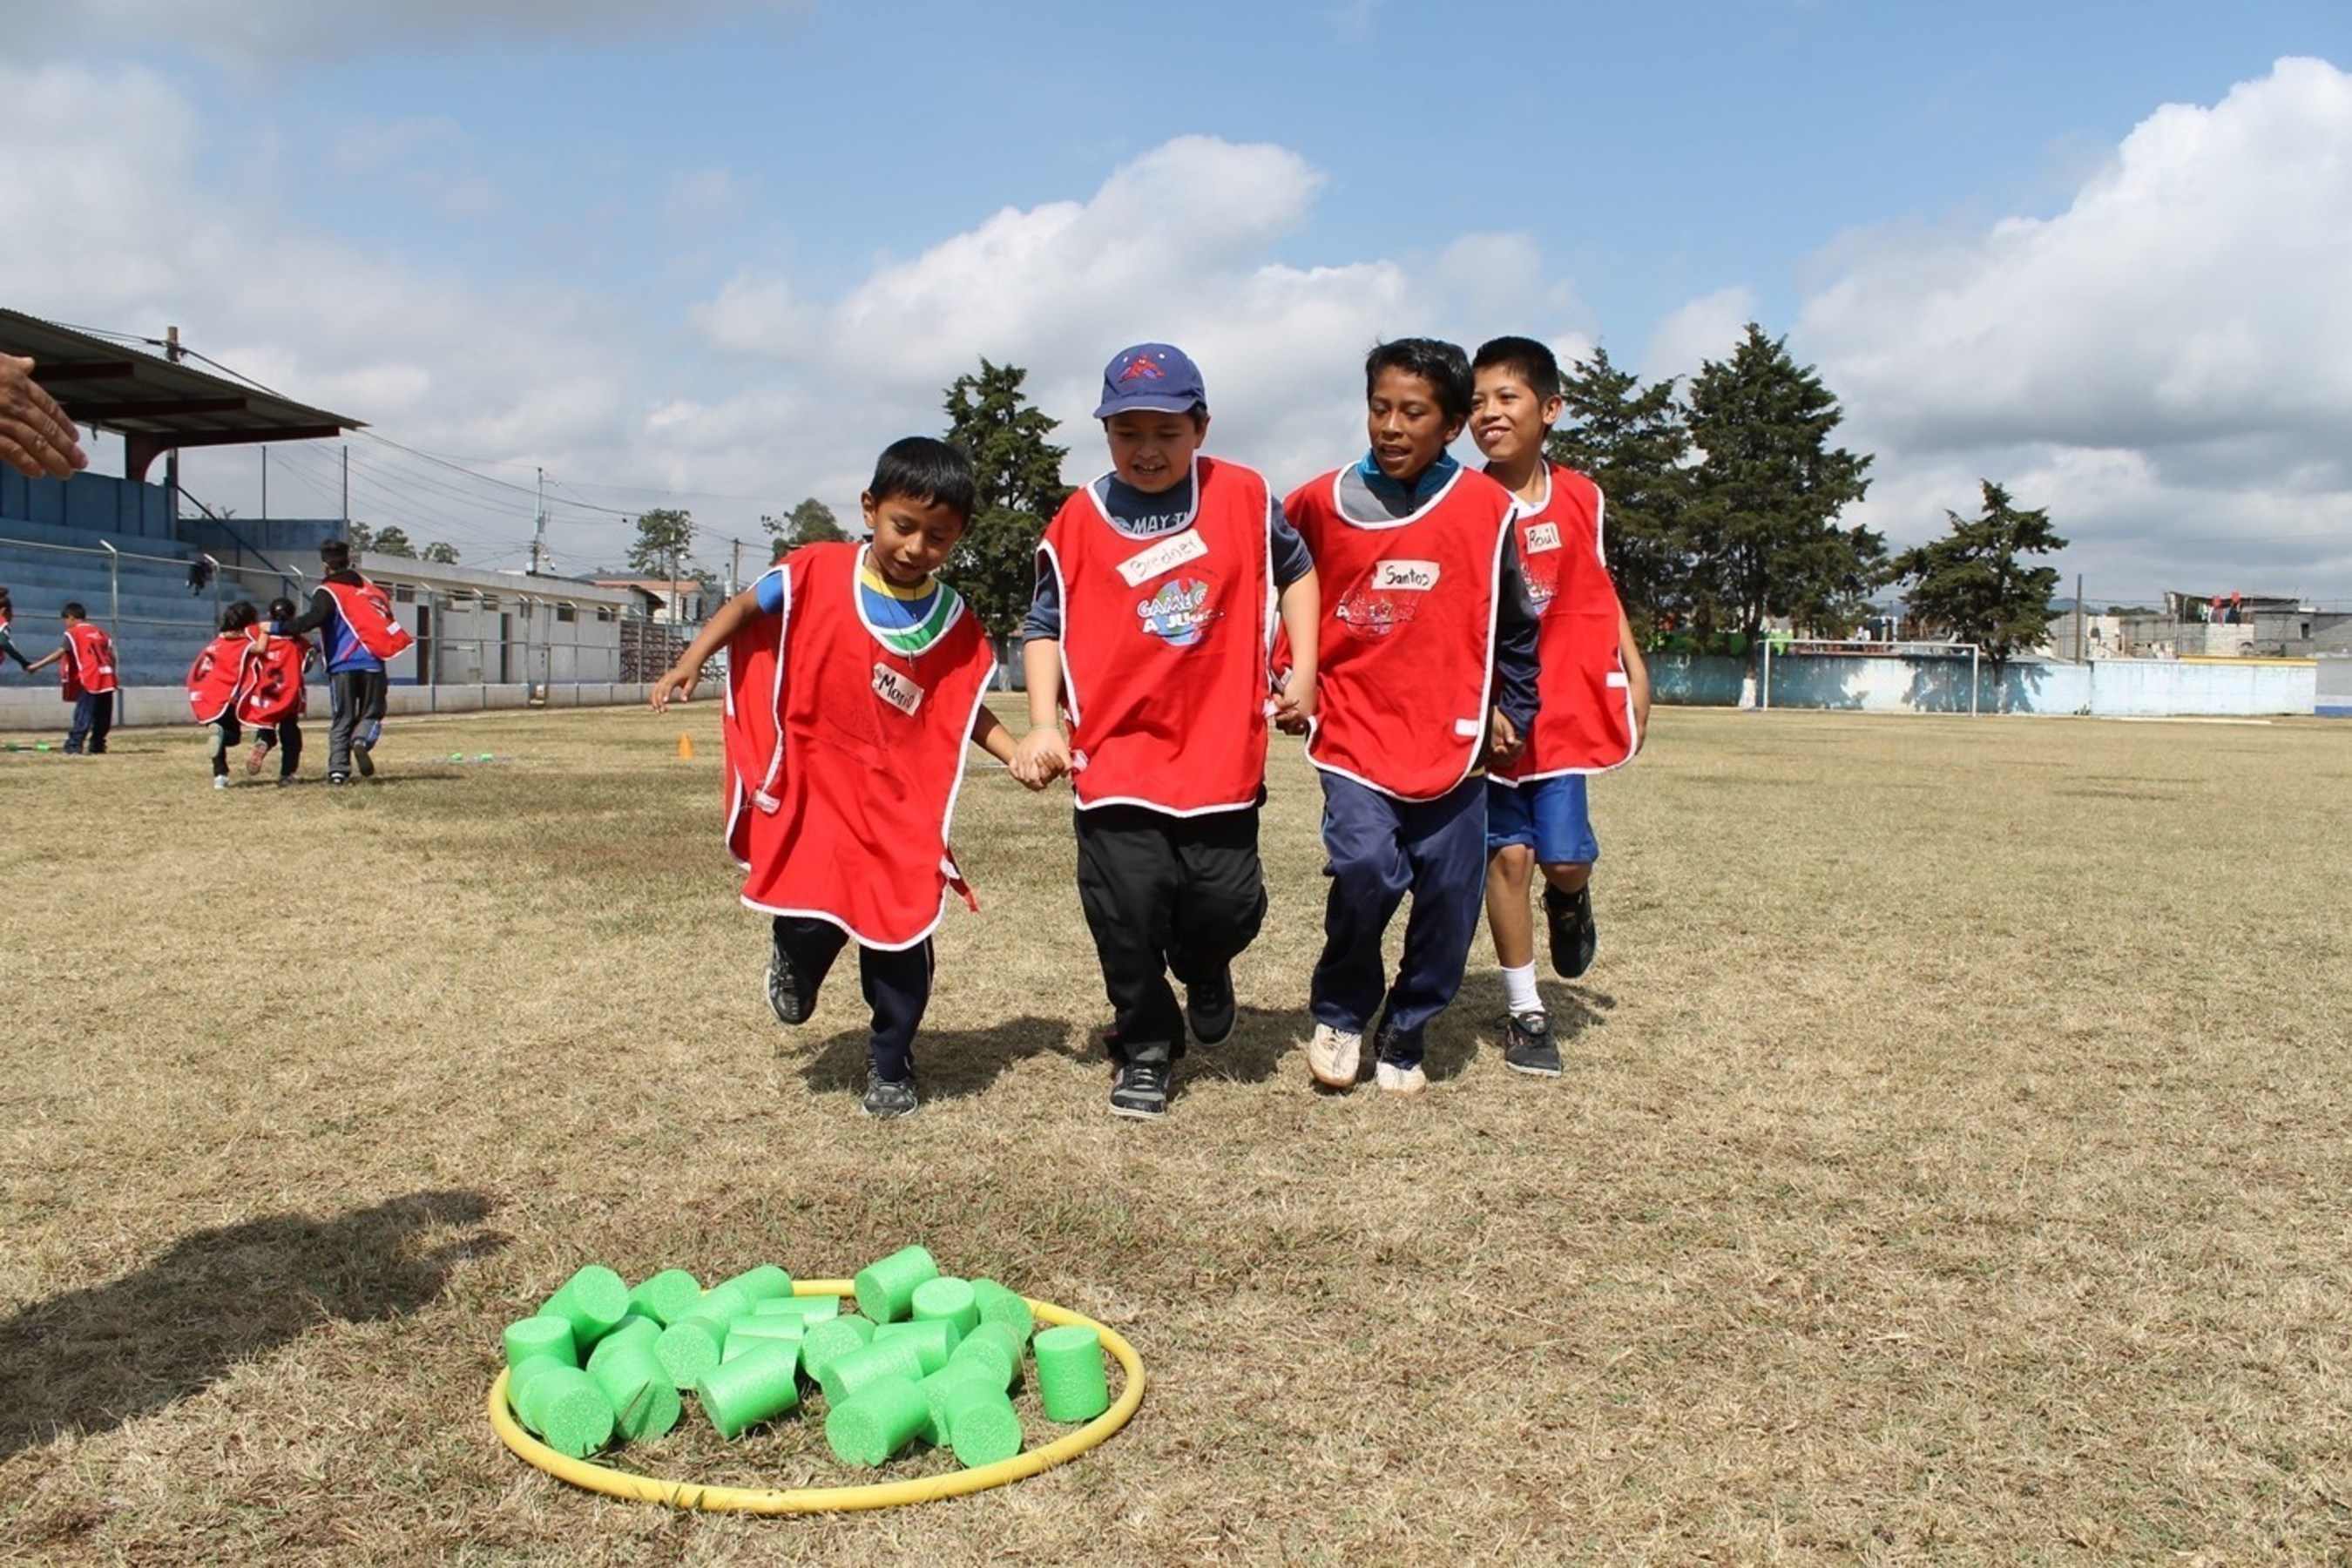 Teamwork is one important life skill kids learn in Children International's Sports for Development program.